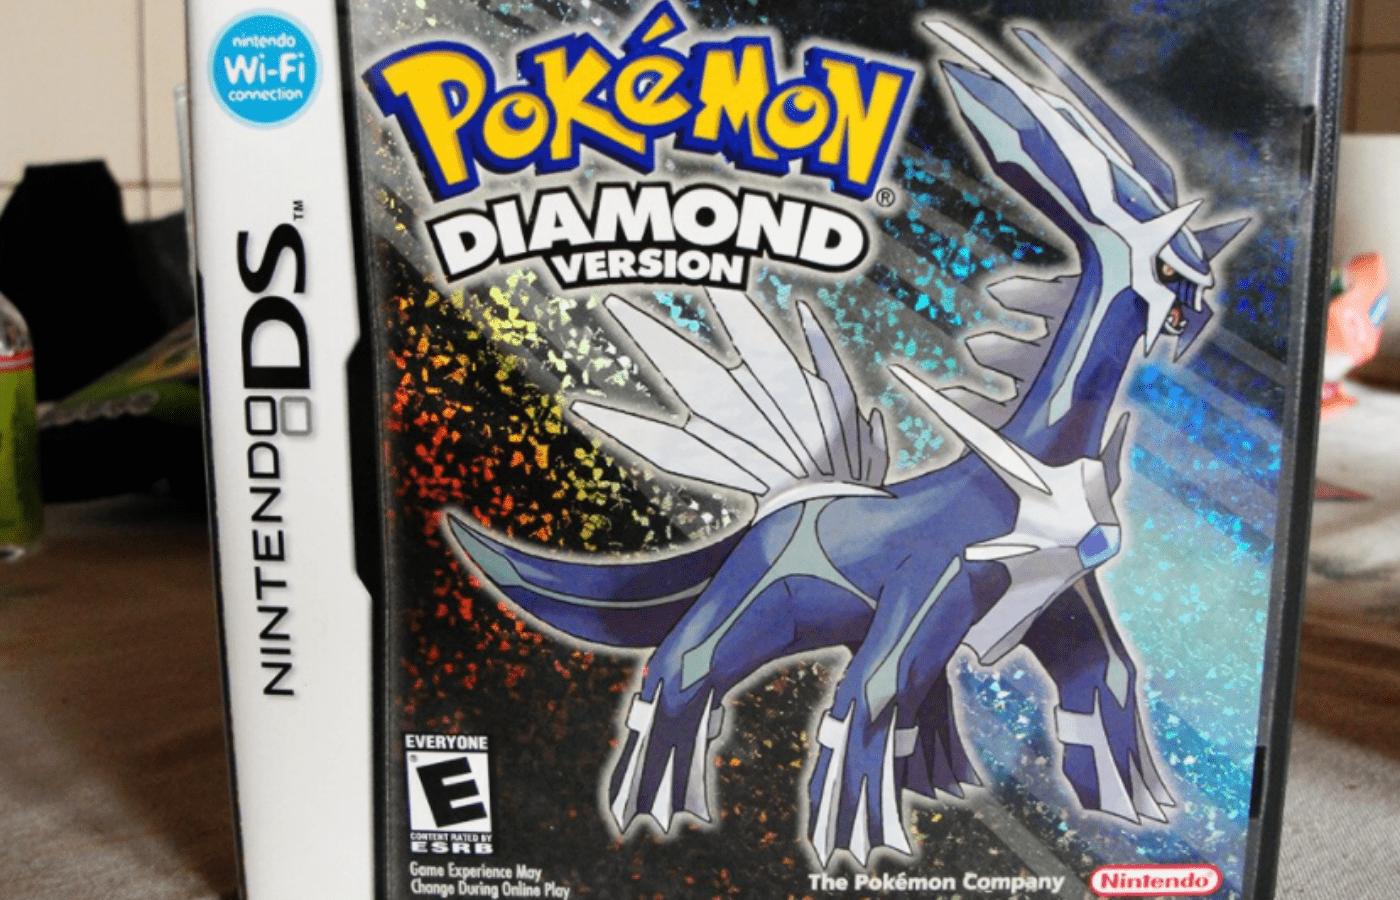 Why Is Pokemon Diamond So Expensive